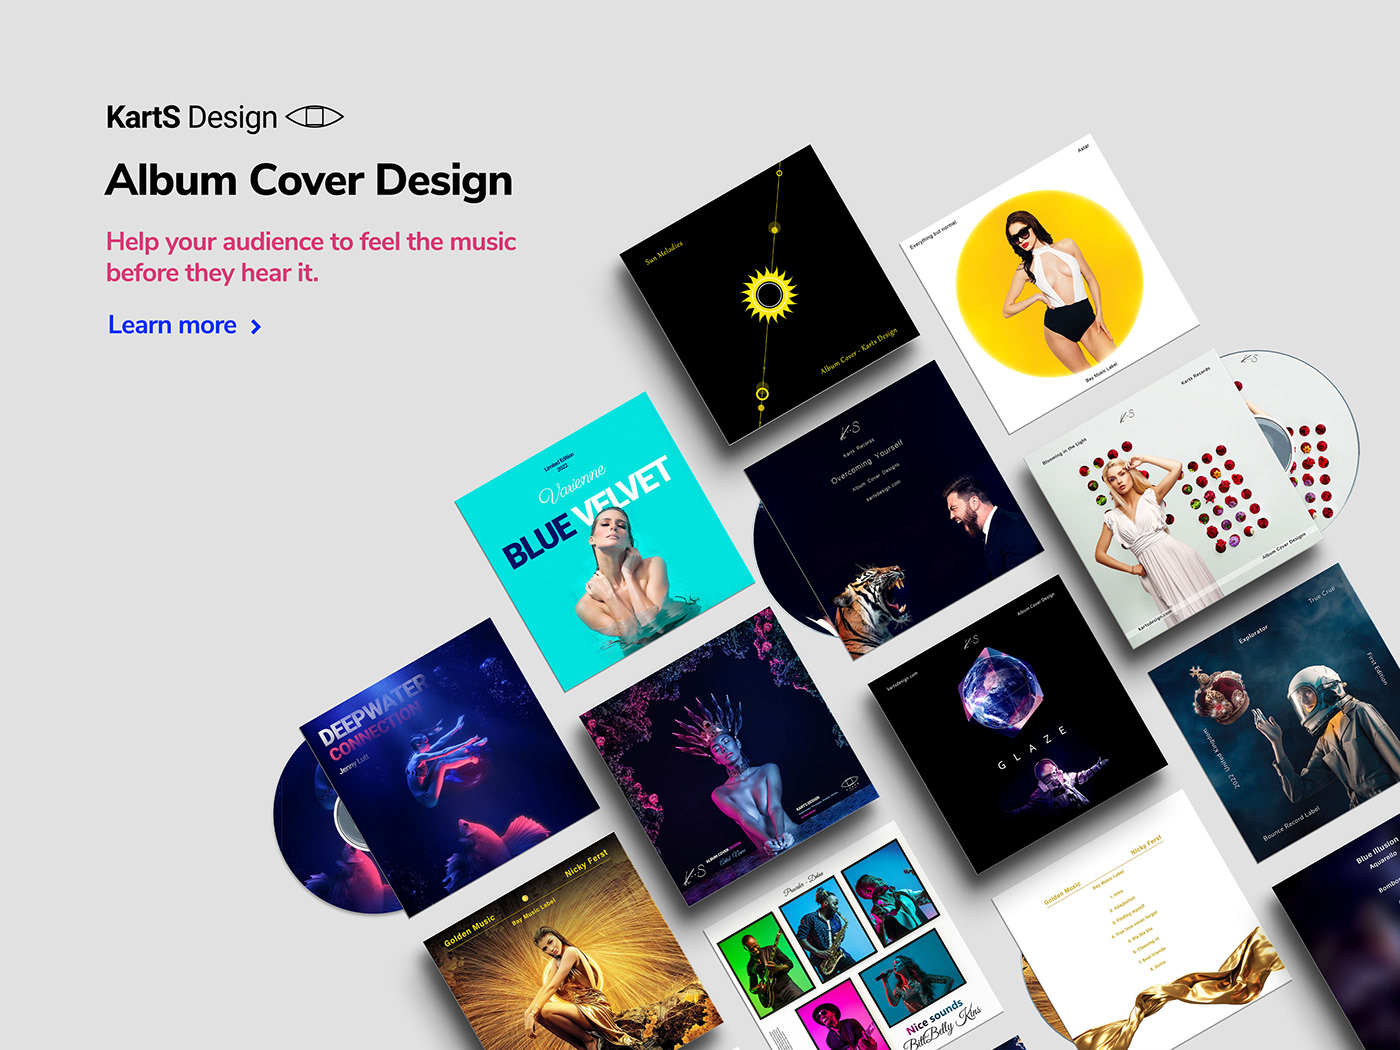 Brand Design brand identity design graphic identity karts kartsdesign visual